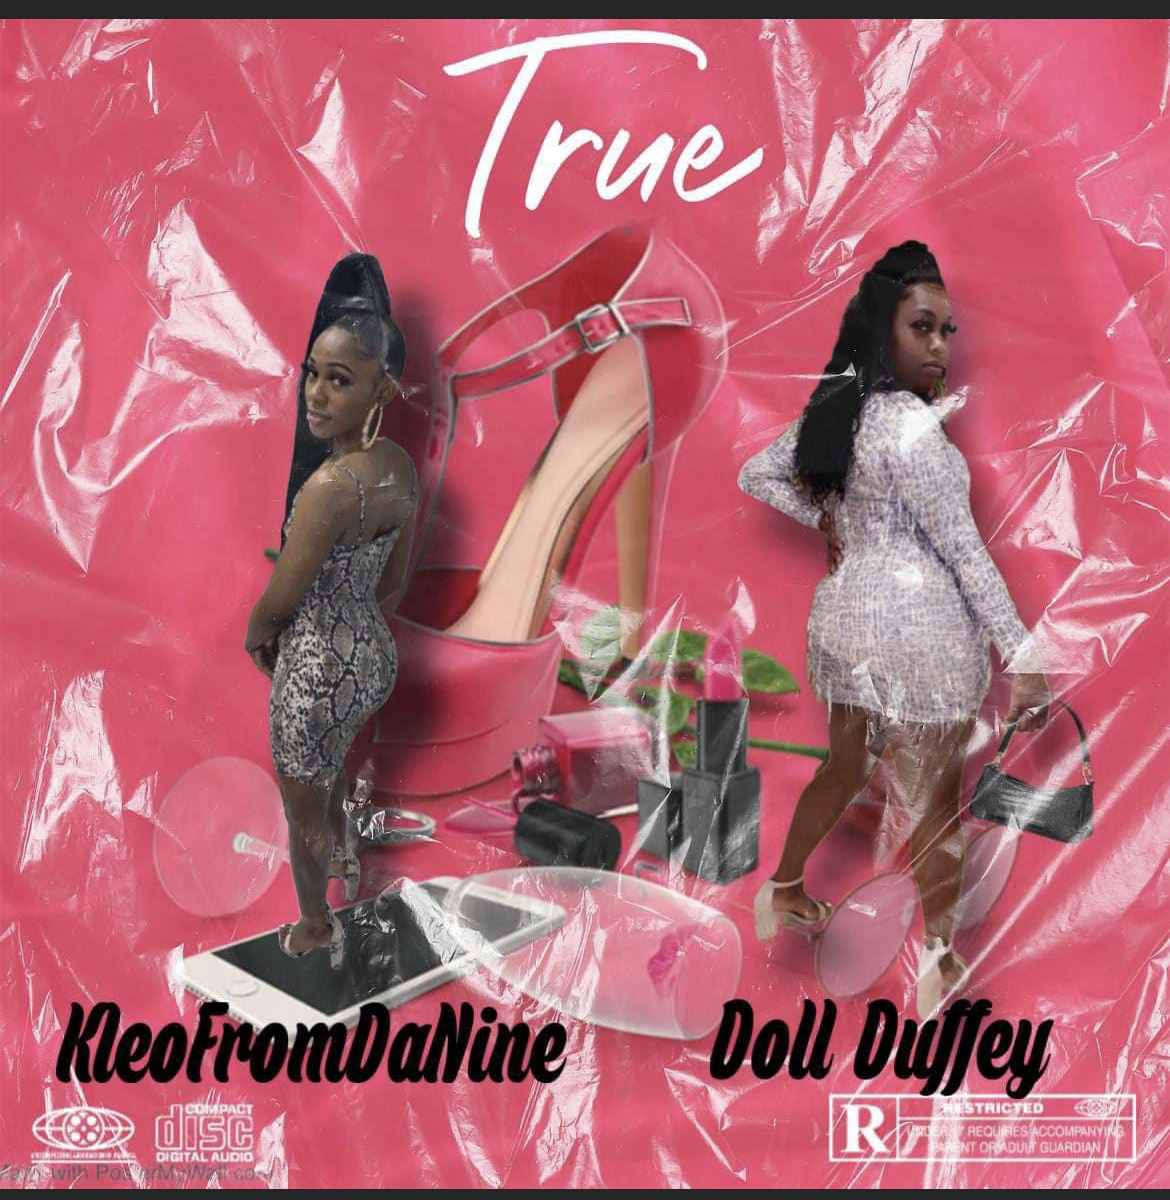 Art for True (Prod. Shad G) by Doll Duffey & KleoFromDaNine